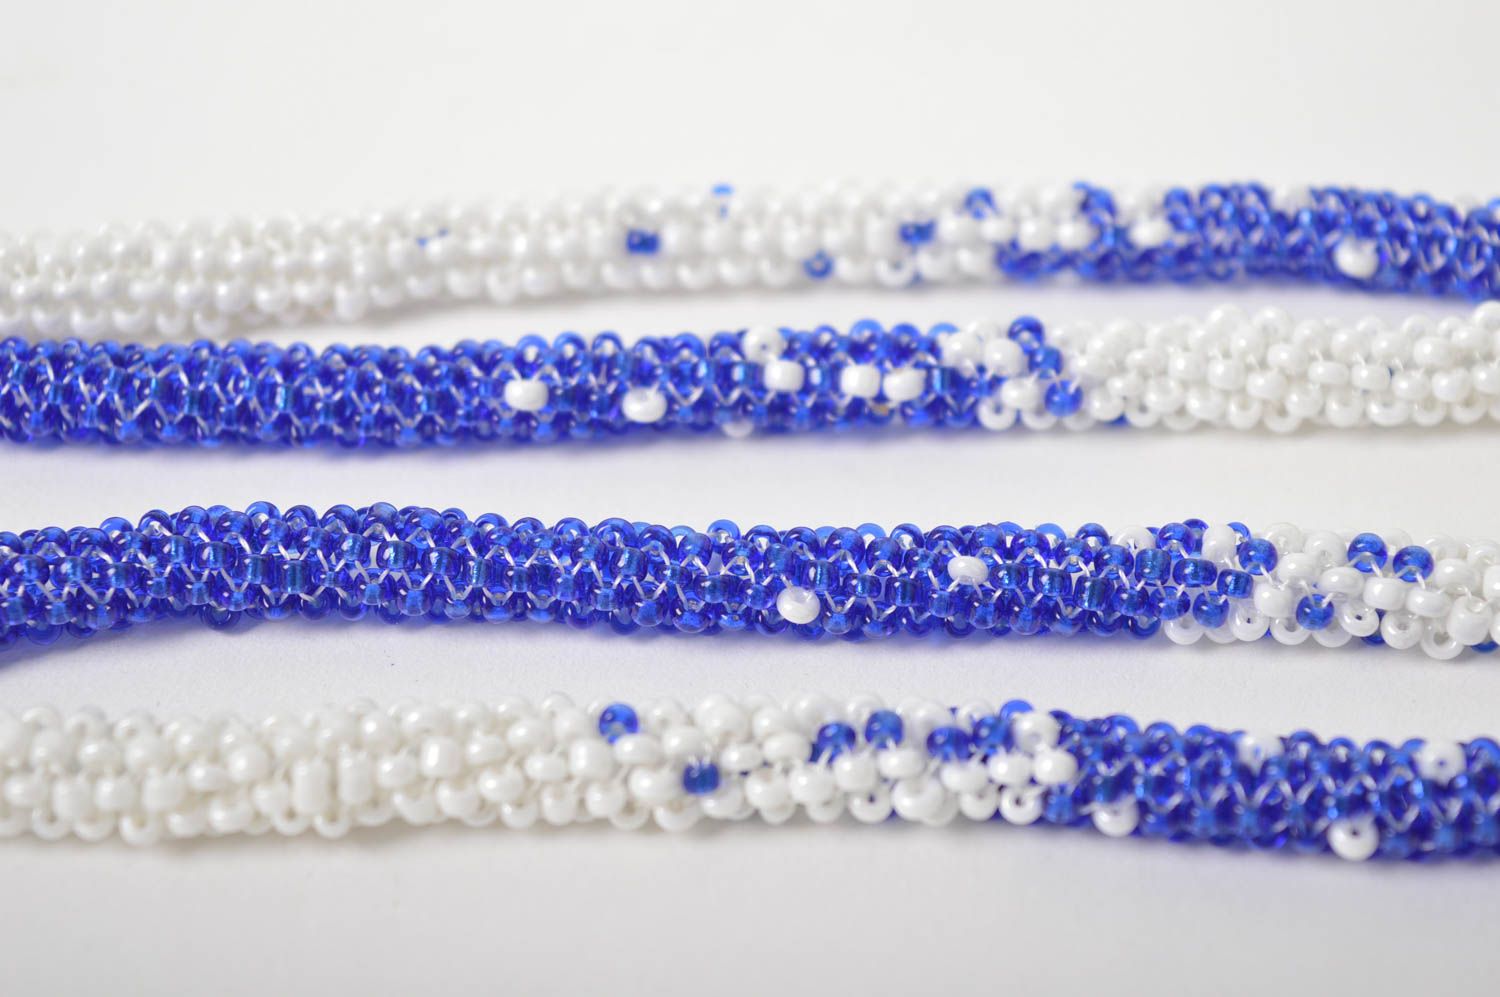 Gentle handmade beaded necklace artisan jewelry designs bead weaving ideas photo 3